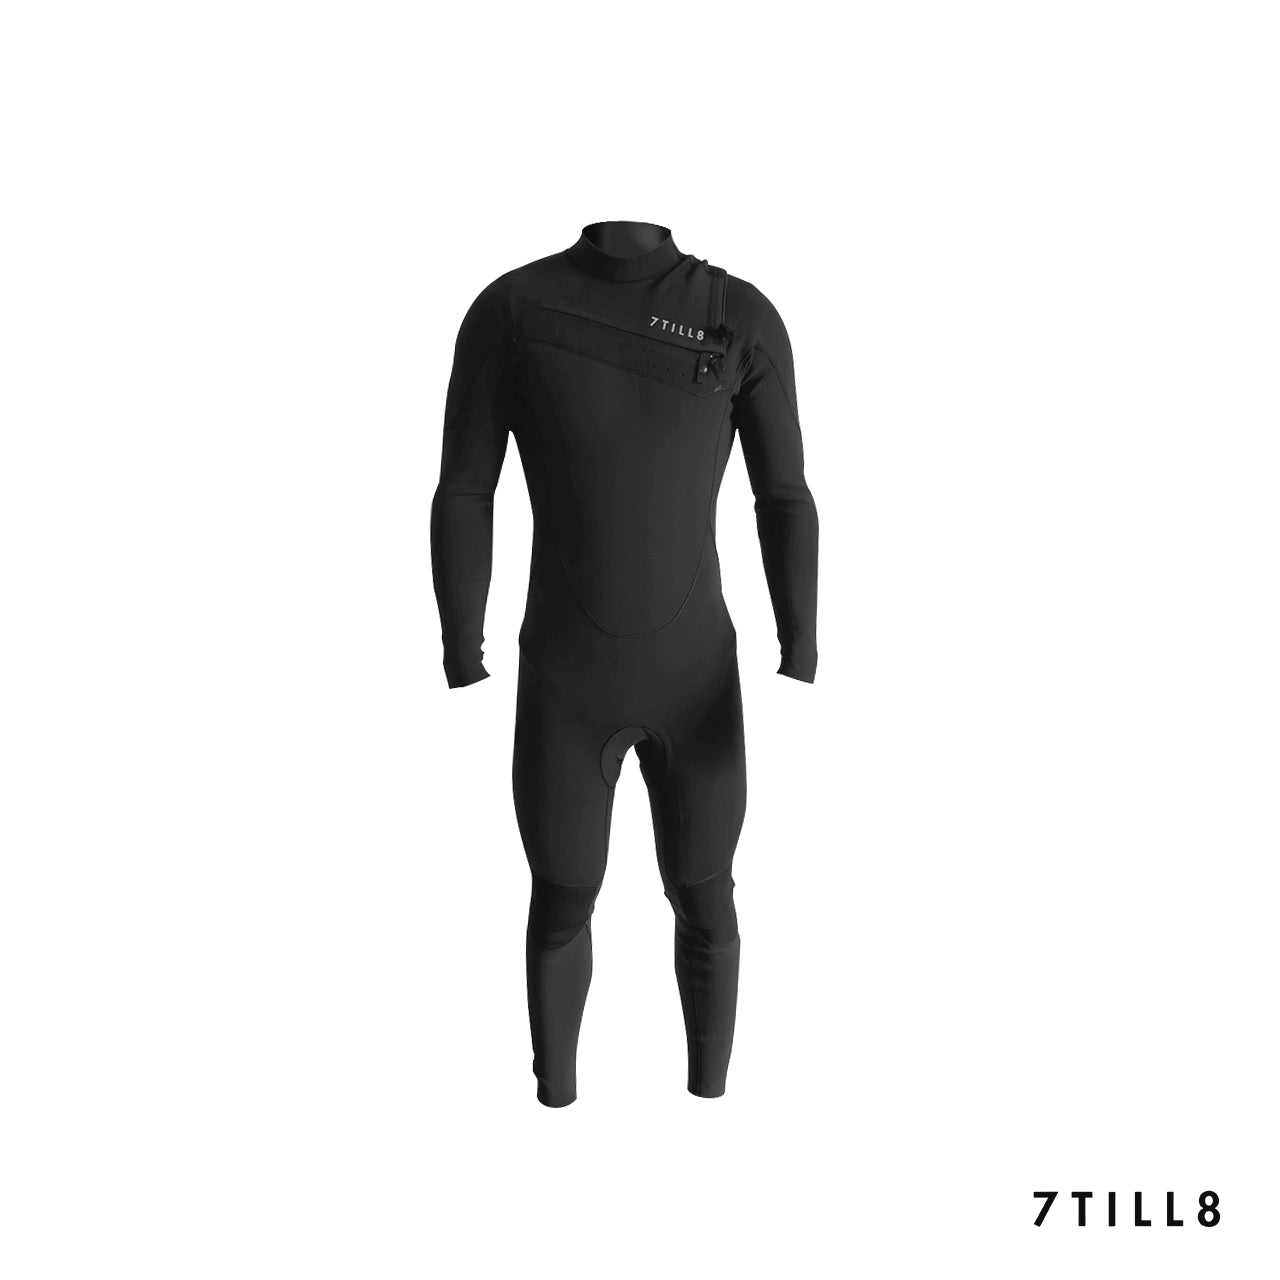 7TILL8 - Combinaison 3/2mm - Front Zip - Fullsuit - Black